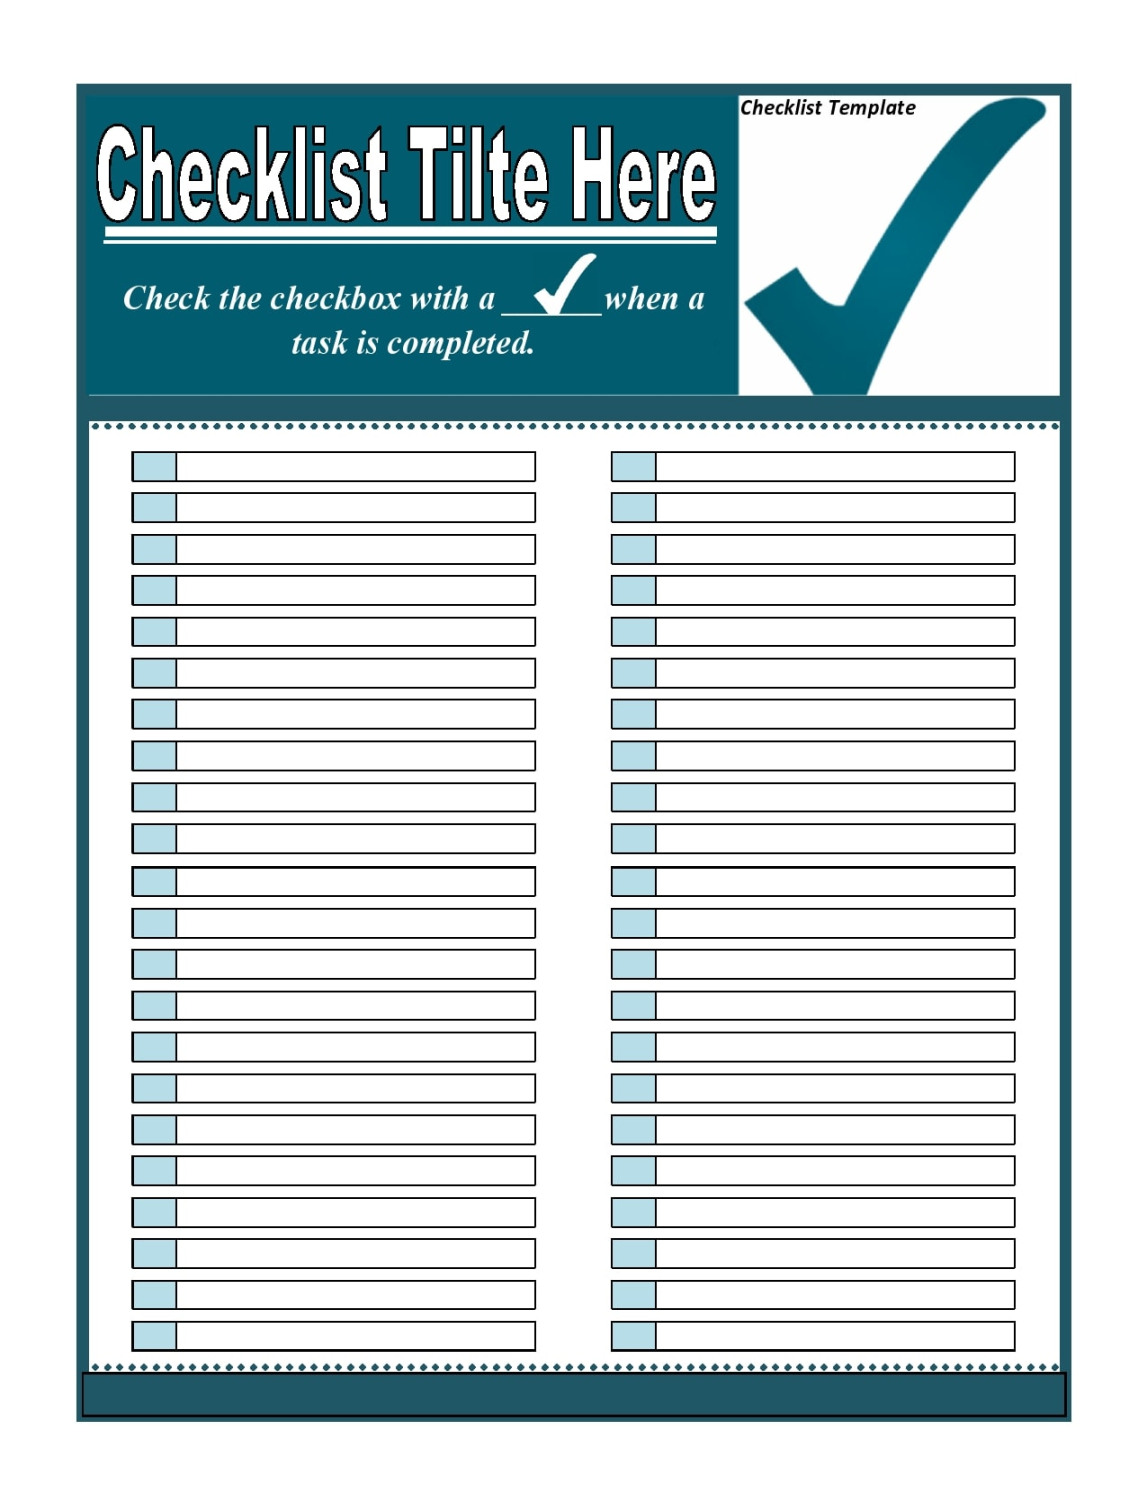 Free Checklist Templates (Word, Excel) - PrintableTemplates